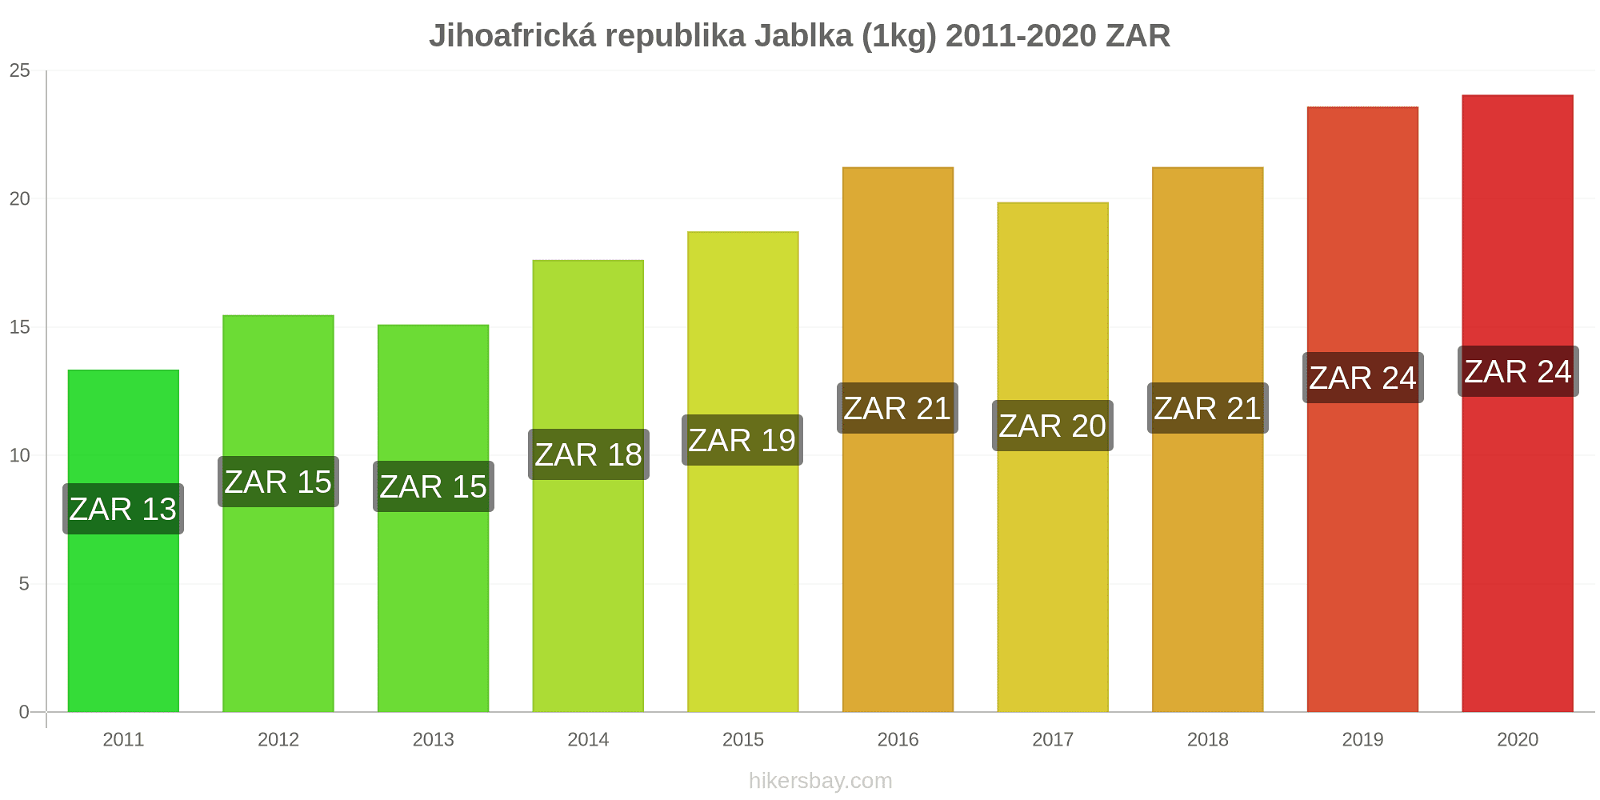 Jihoafrická republika změny cen Jablka (1kg) hikersbay.com